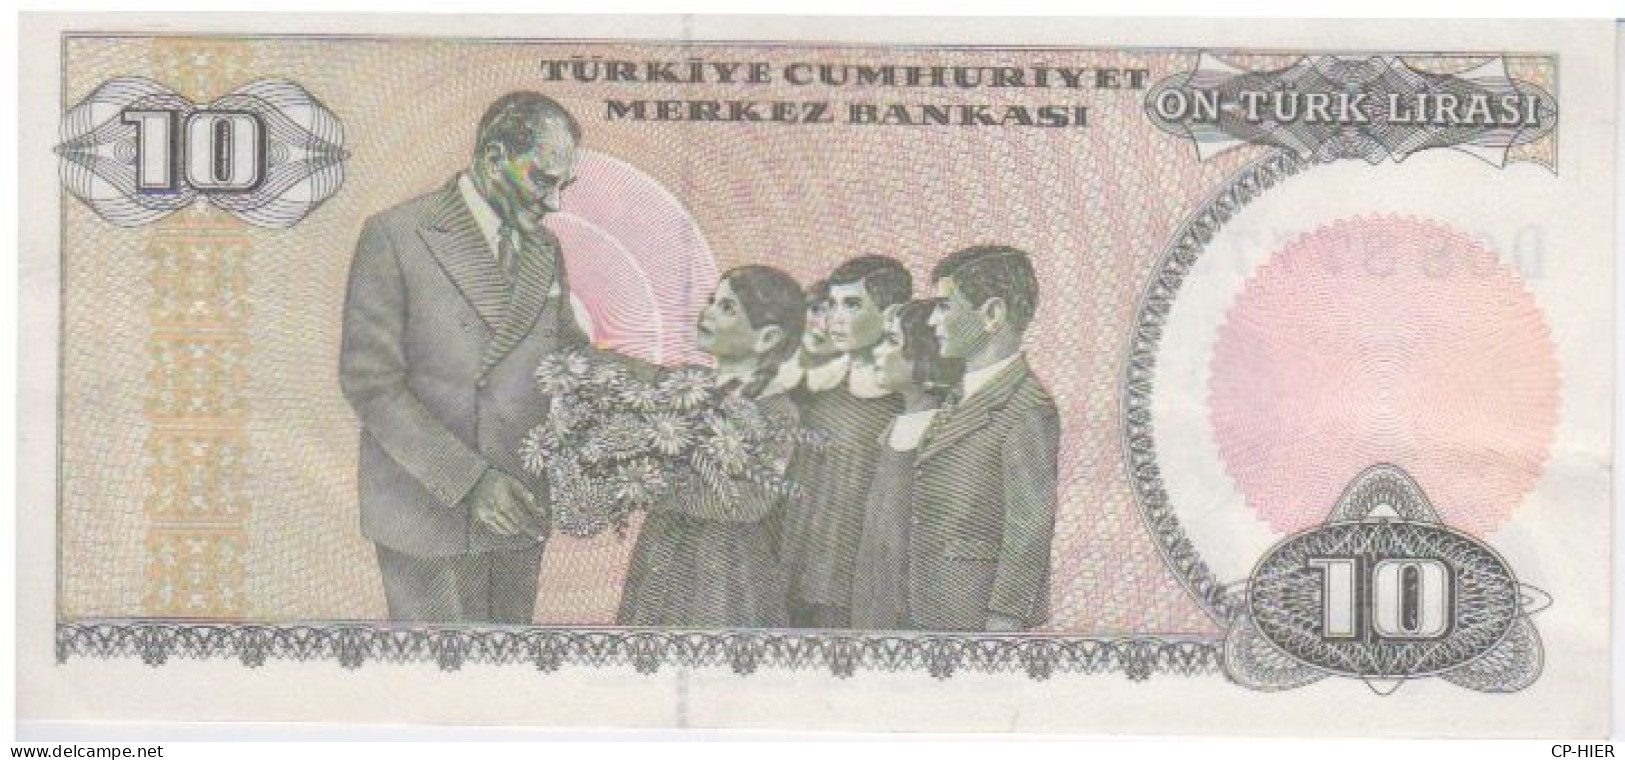 BILLET TURC - TURQUIE - TÜRKIYE -  ON TURK LIRASI 10 - Turchia